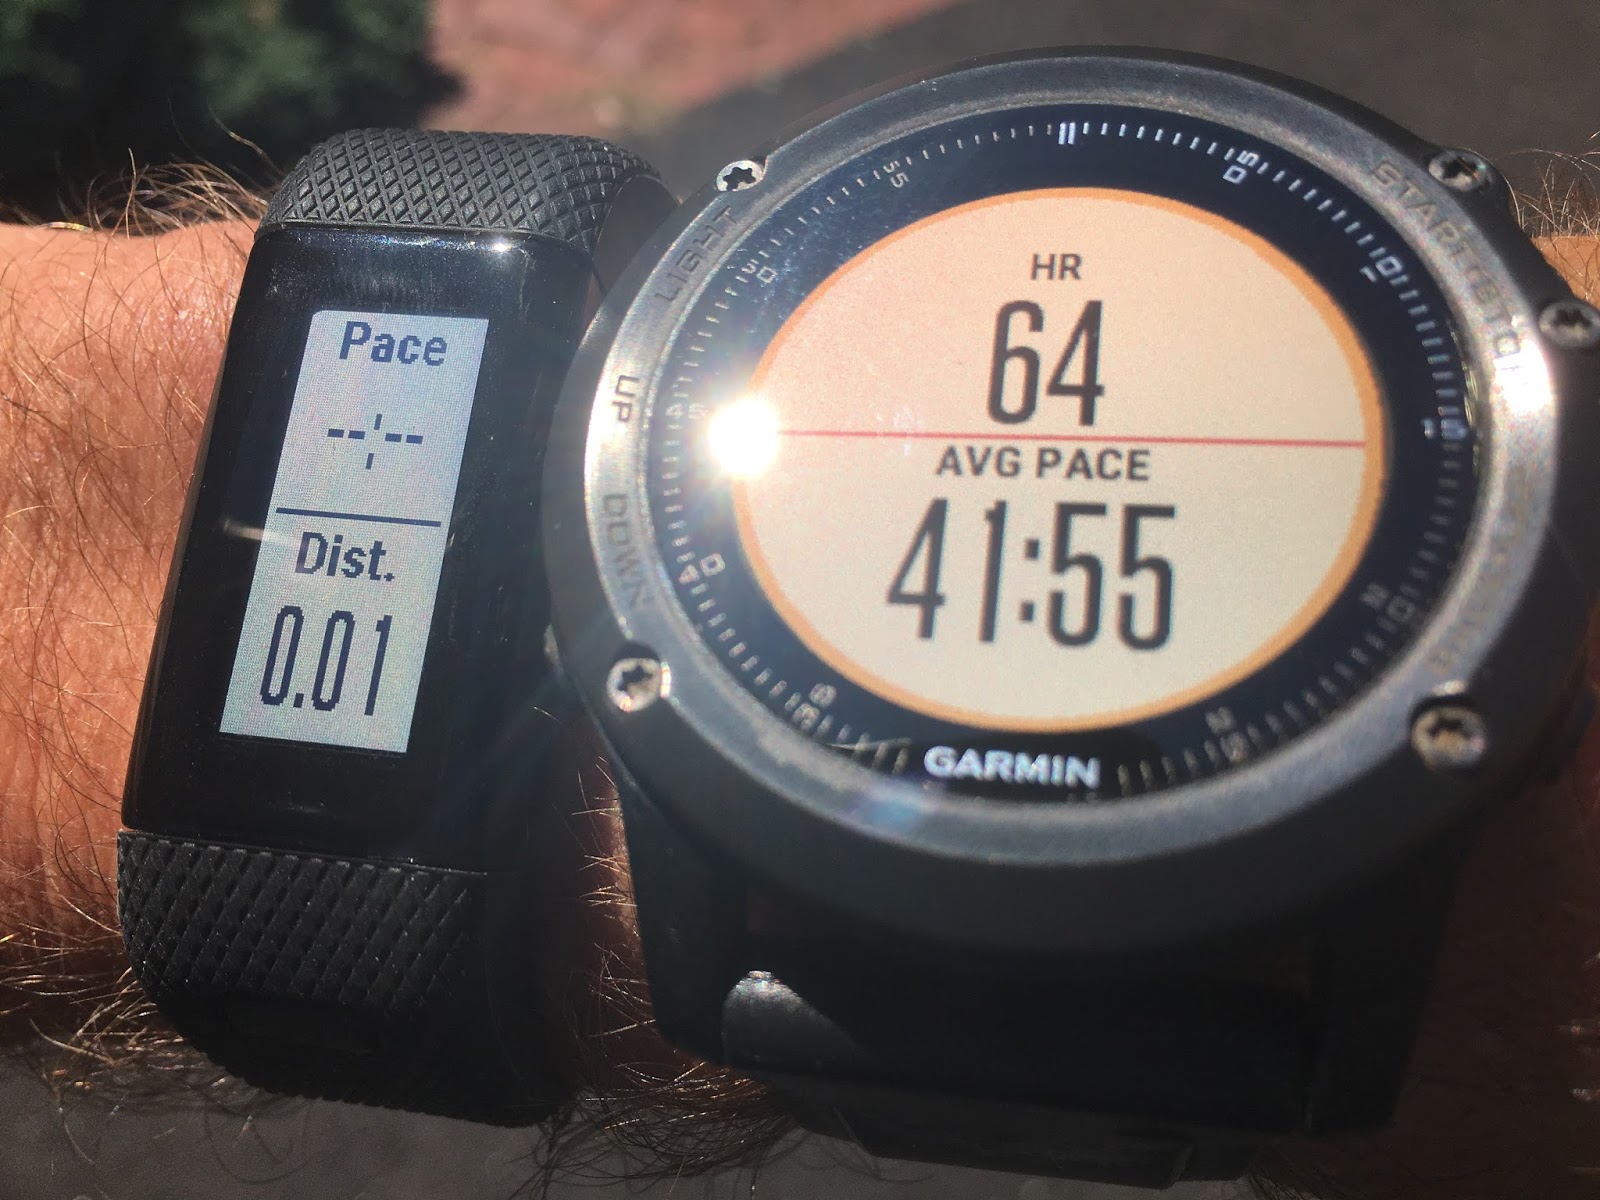 Run: Review Garmin Vivosmart HR+: Band Sized GPS Run Watch. Yes Full GPS Run Capablities on Board!